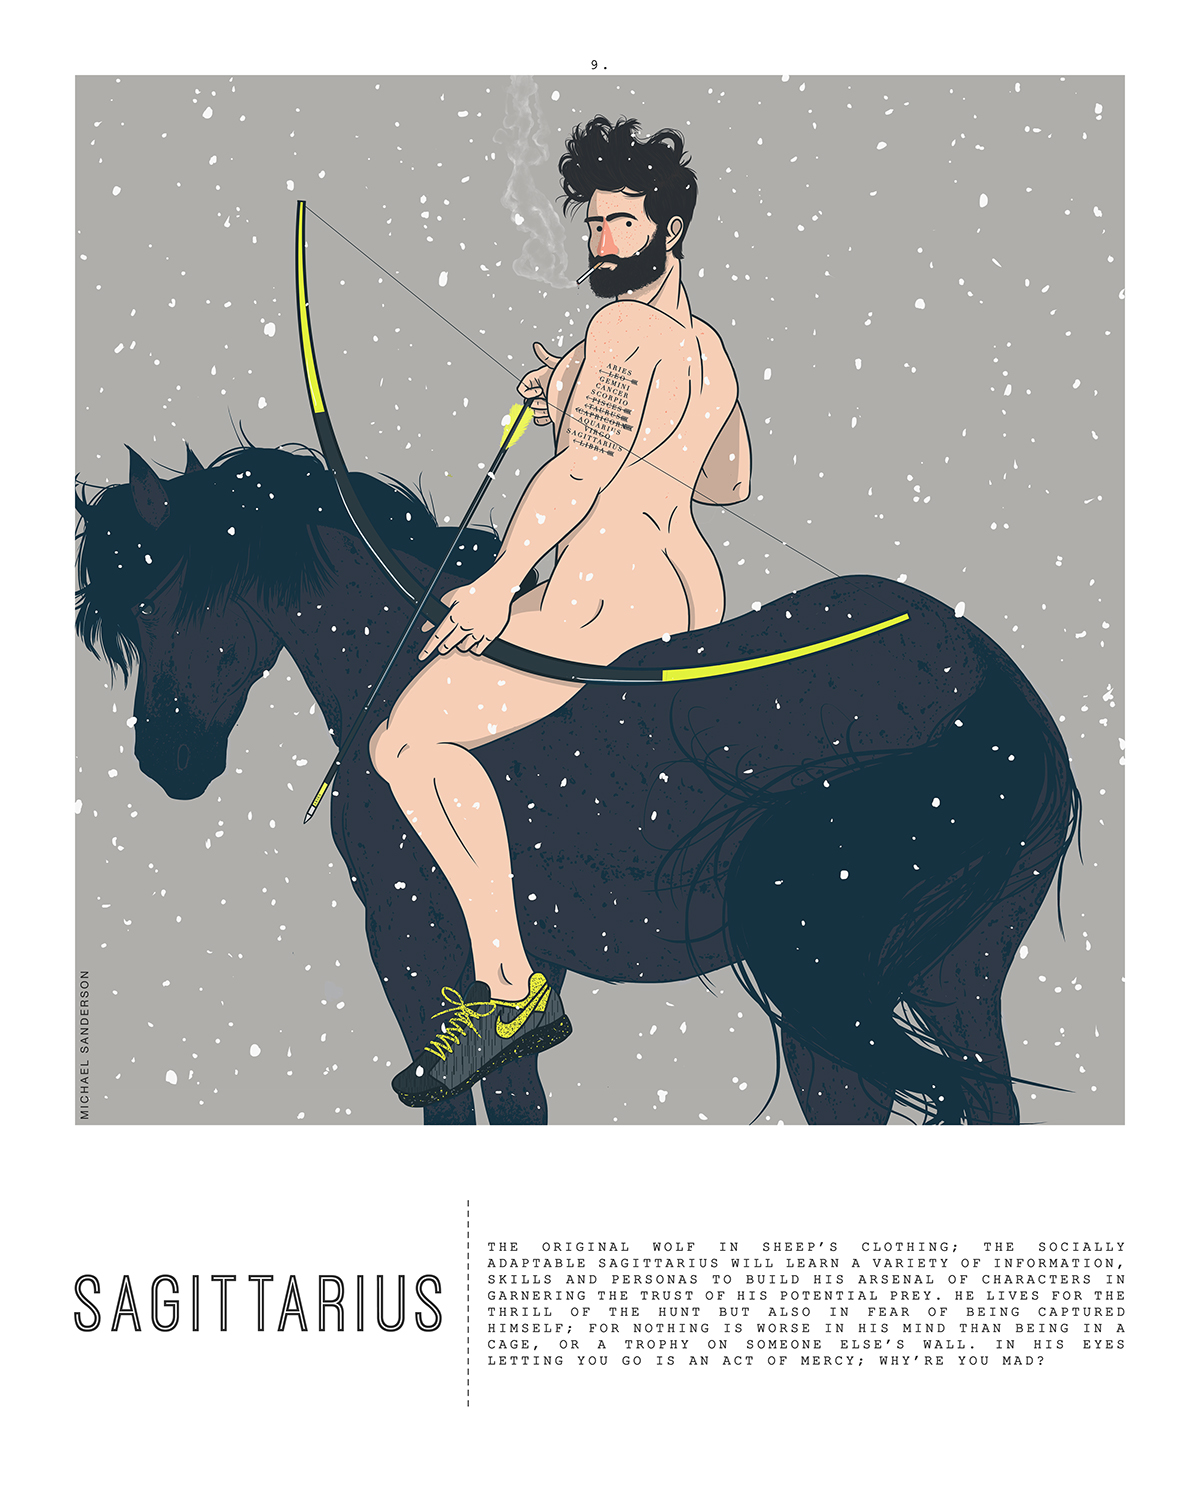 zodiac men Astrology Menswear underwear mensfashion gay erotic Adult prints Editions malemodel sexy athletic activewear